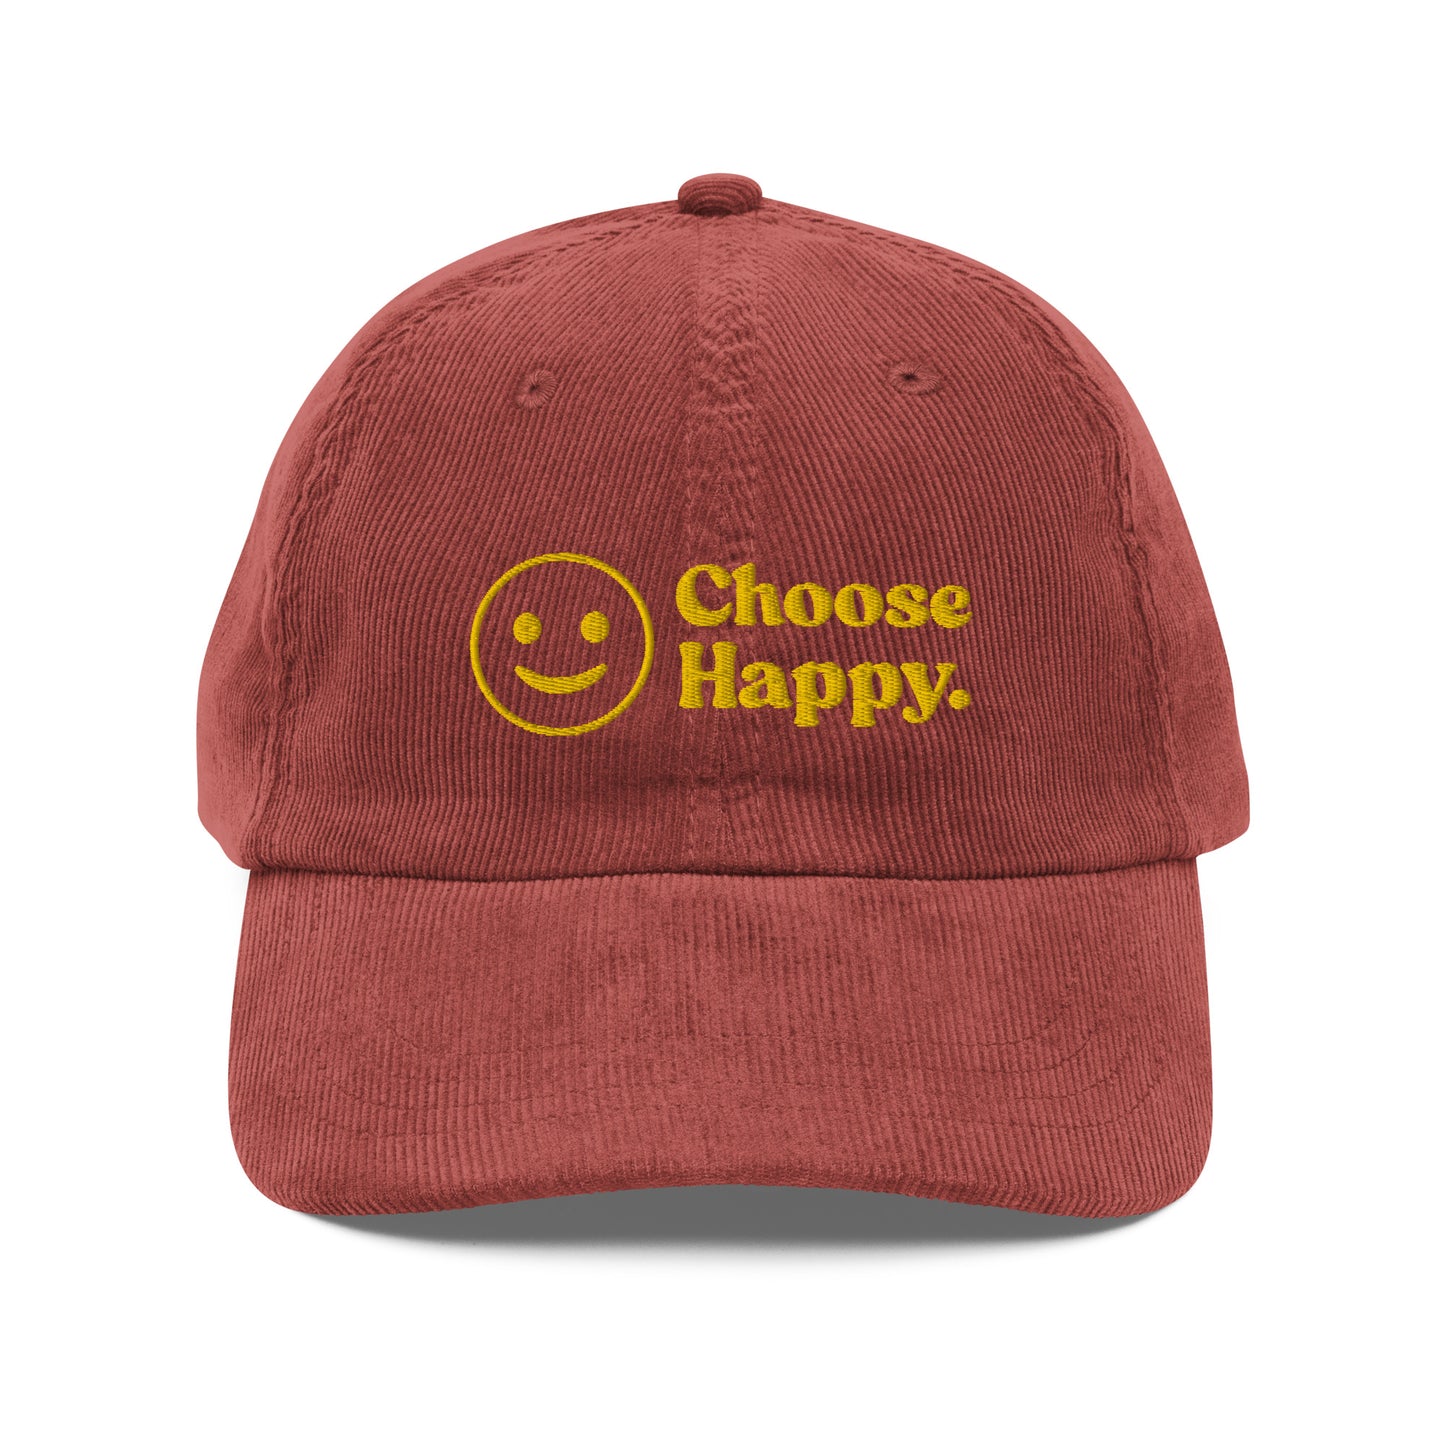 Choose Happy Embroidered Vintage corduroy cap